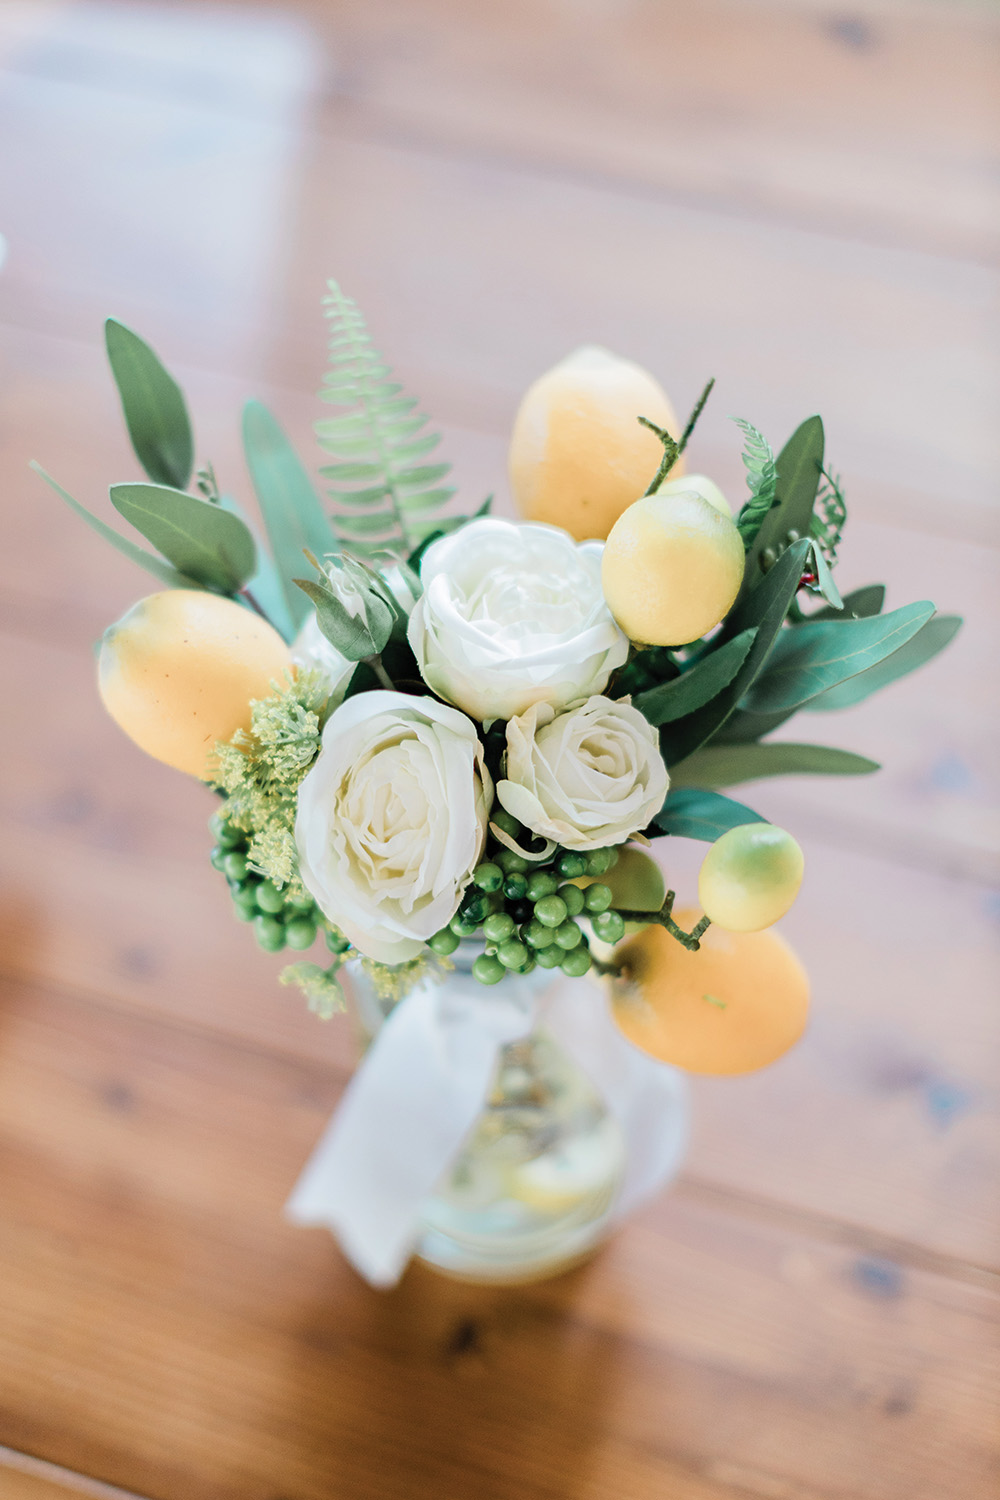 lemon and fresh flowers small bouquet wedding